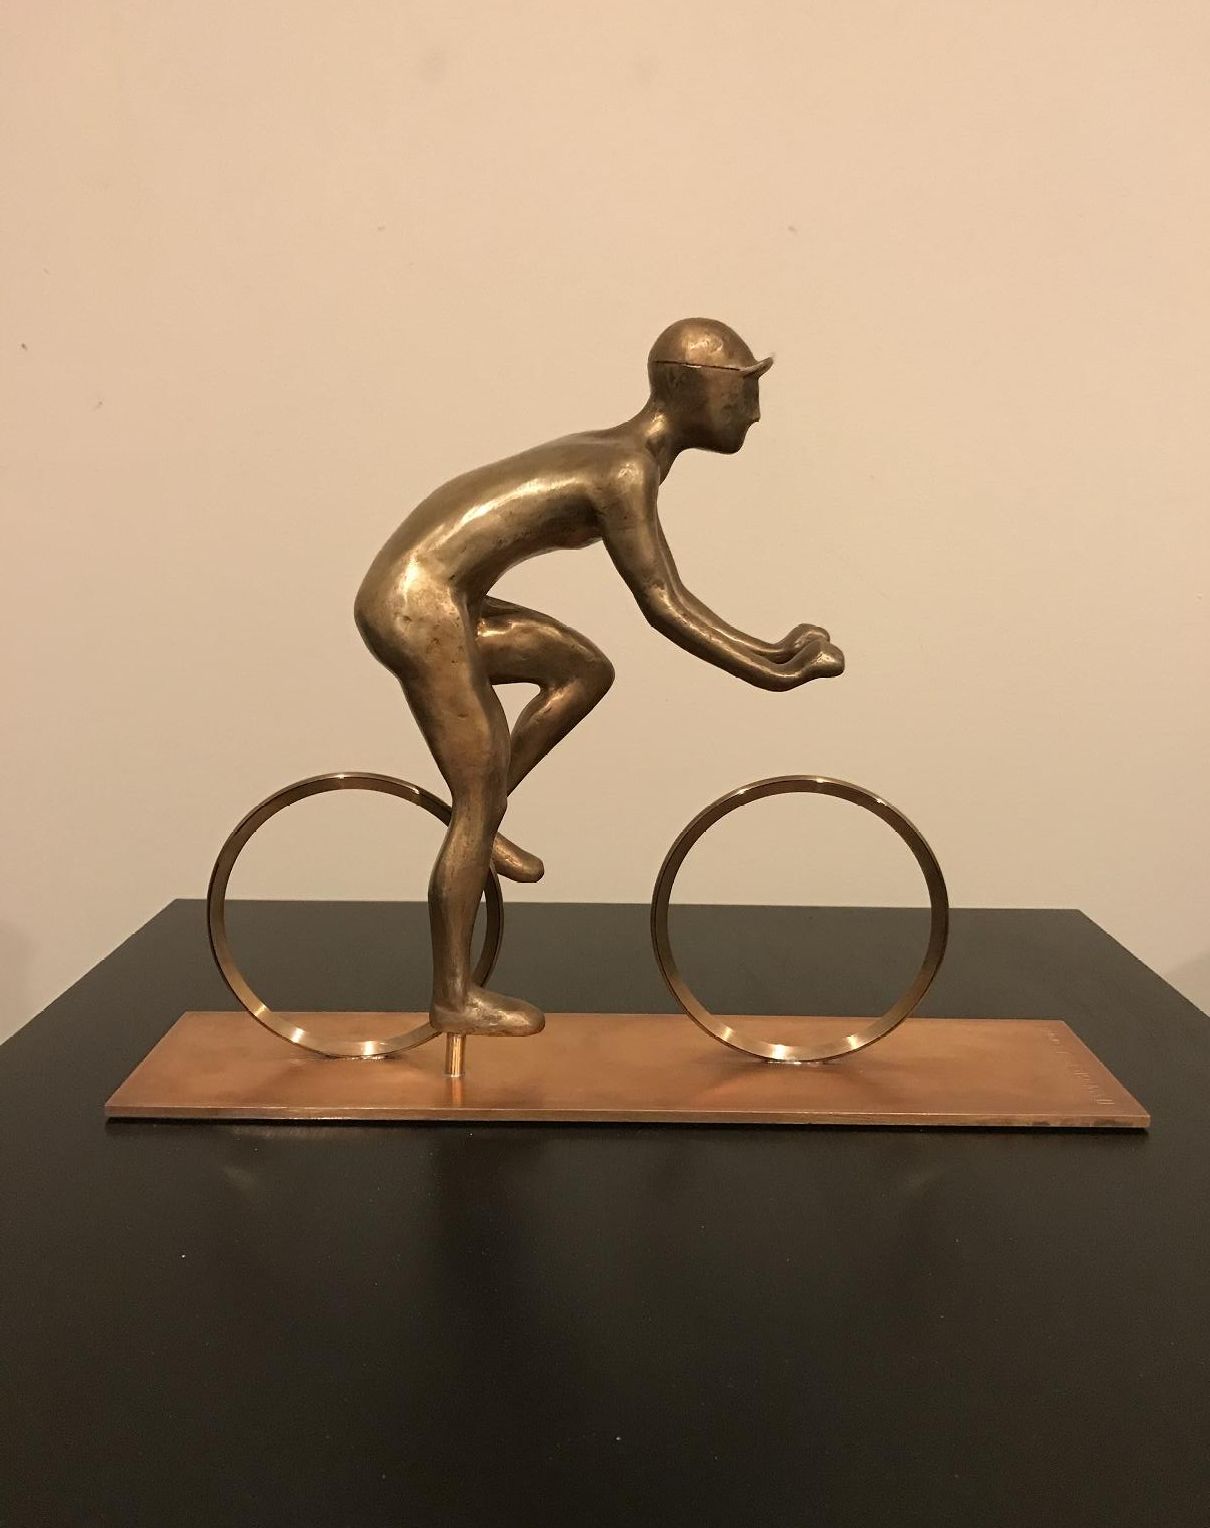 Csasznyi Dénes, cassysculpture,  bronze sculpture, cyclist,